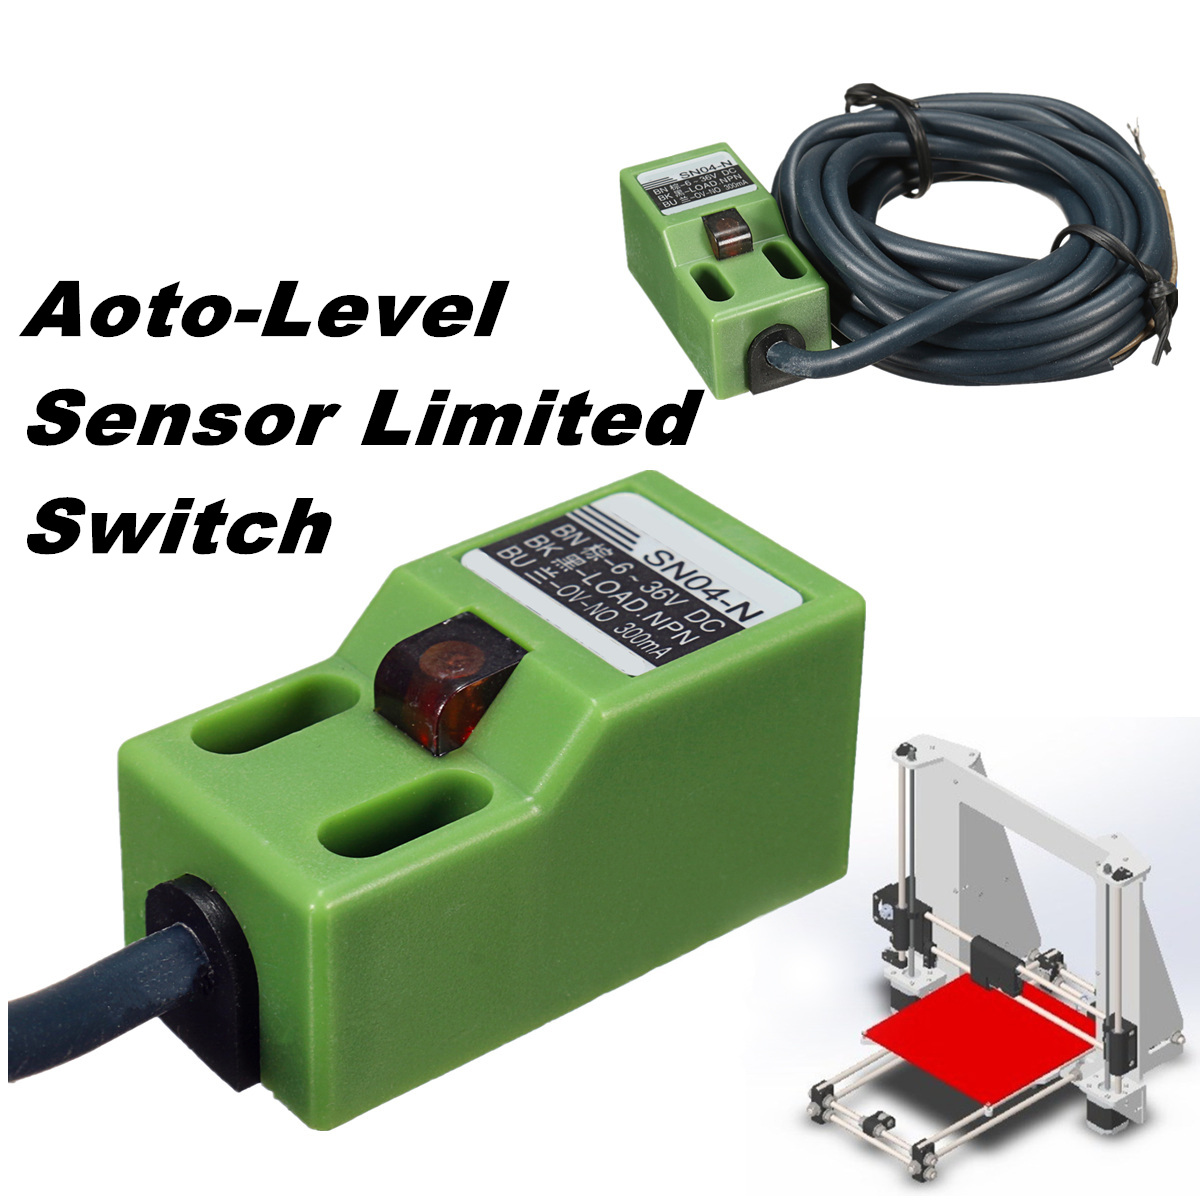 6-36V Auto-Level Sensor Limited Waterproof Switch For Prusa I3 3D Printer 10